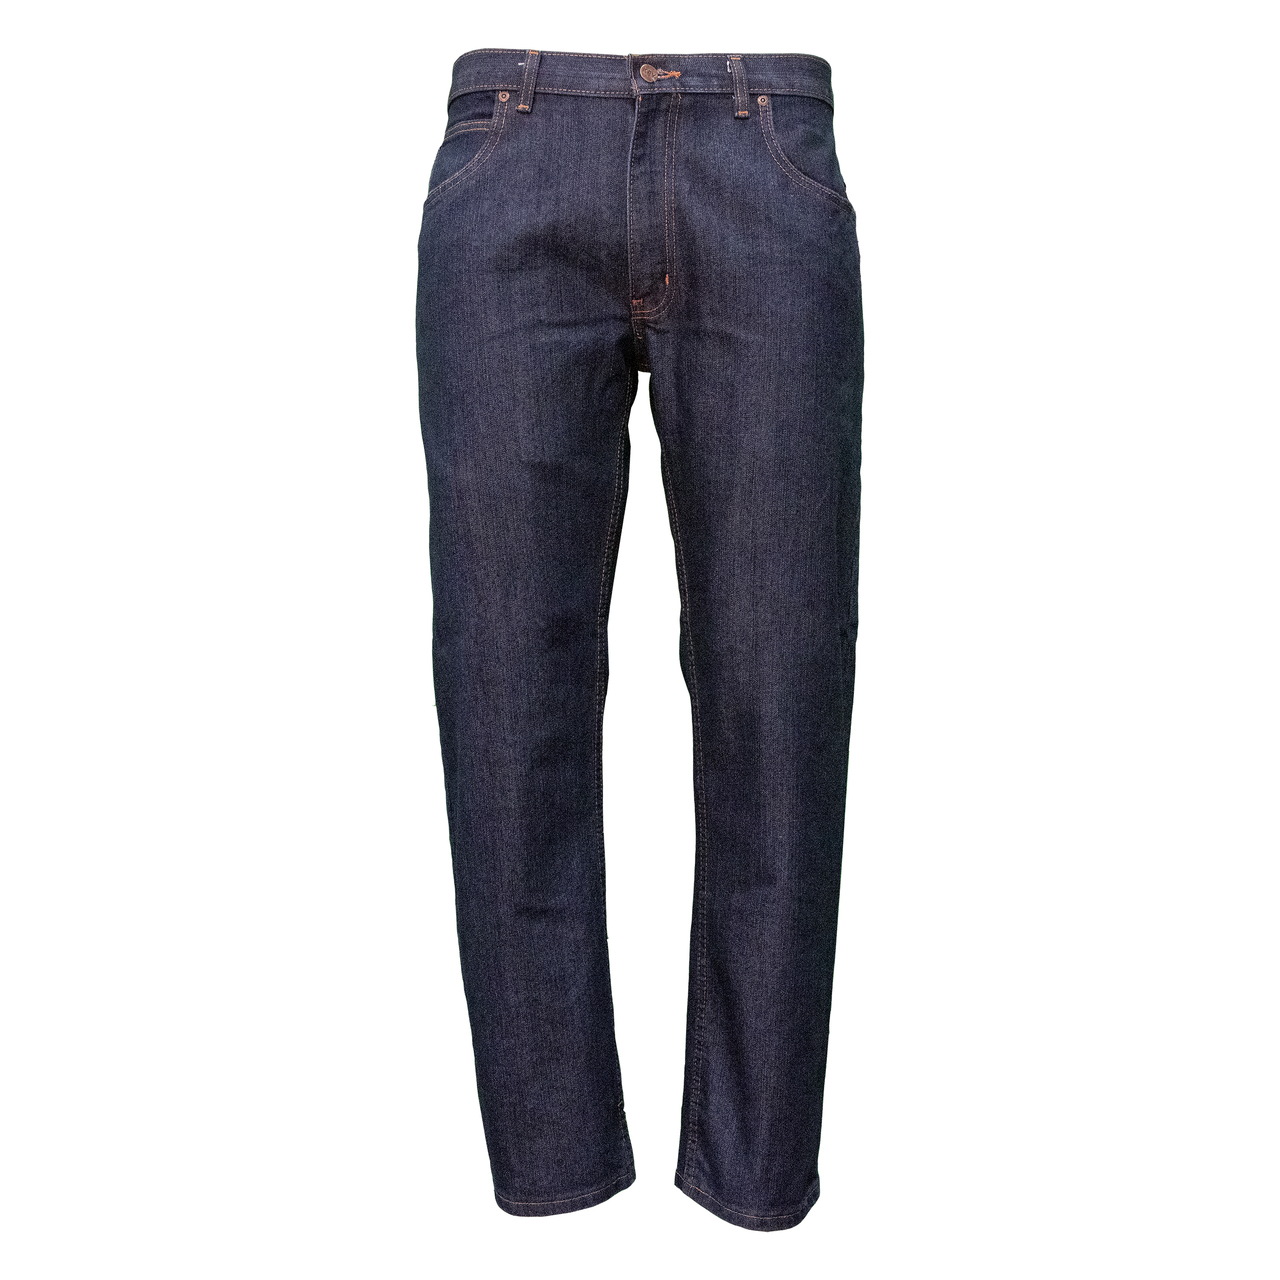 Men's Flex Denim 5-Pocket Jean